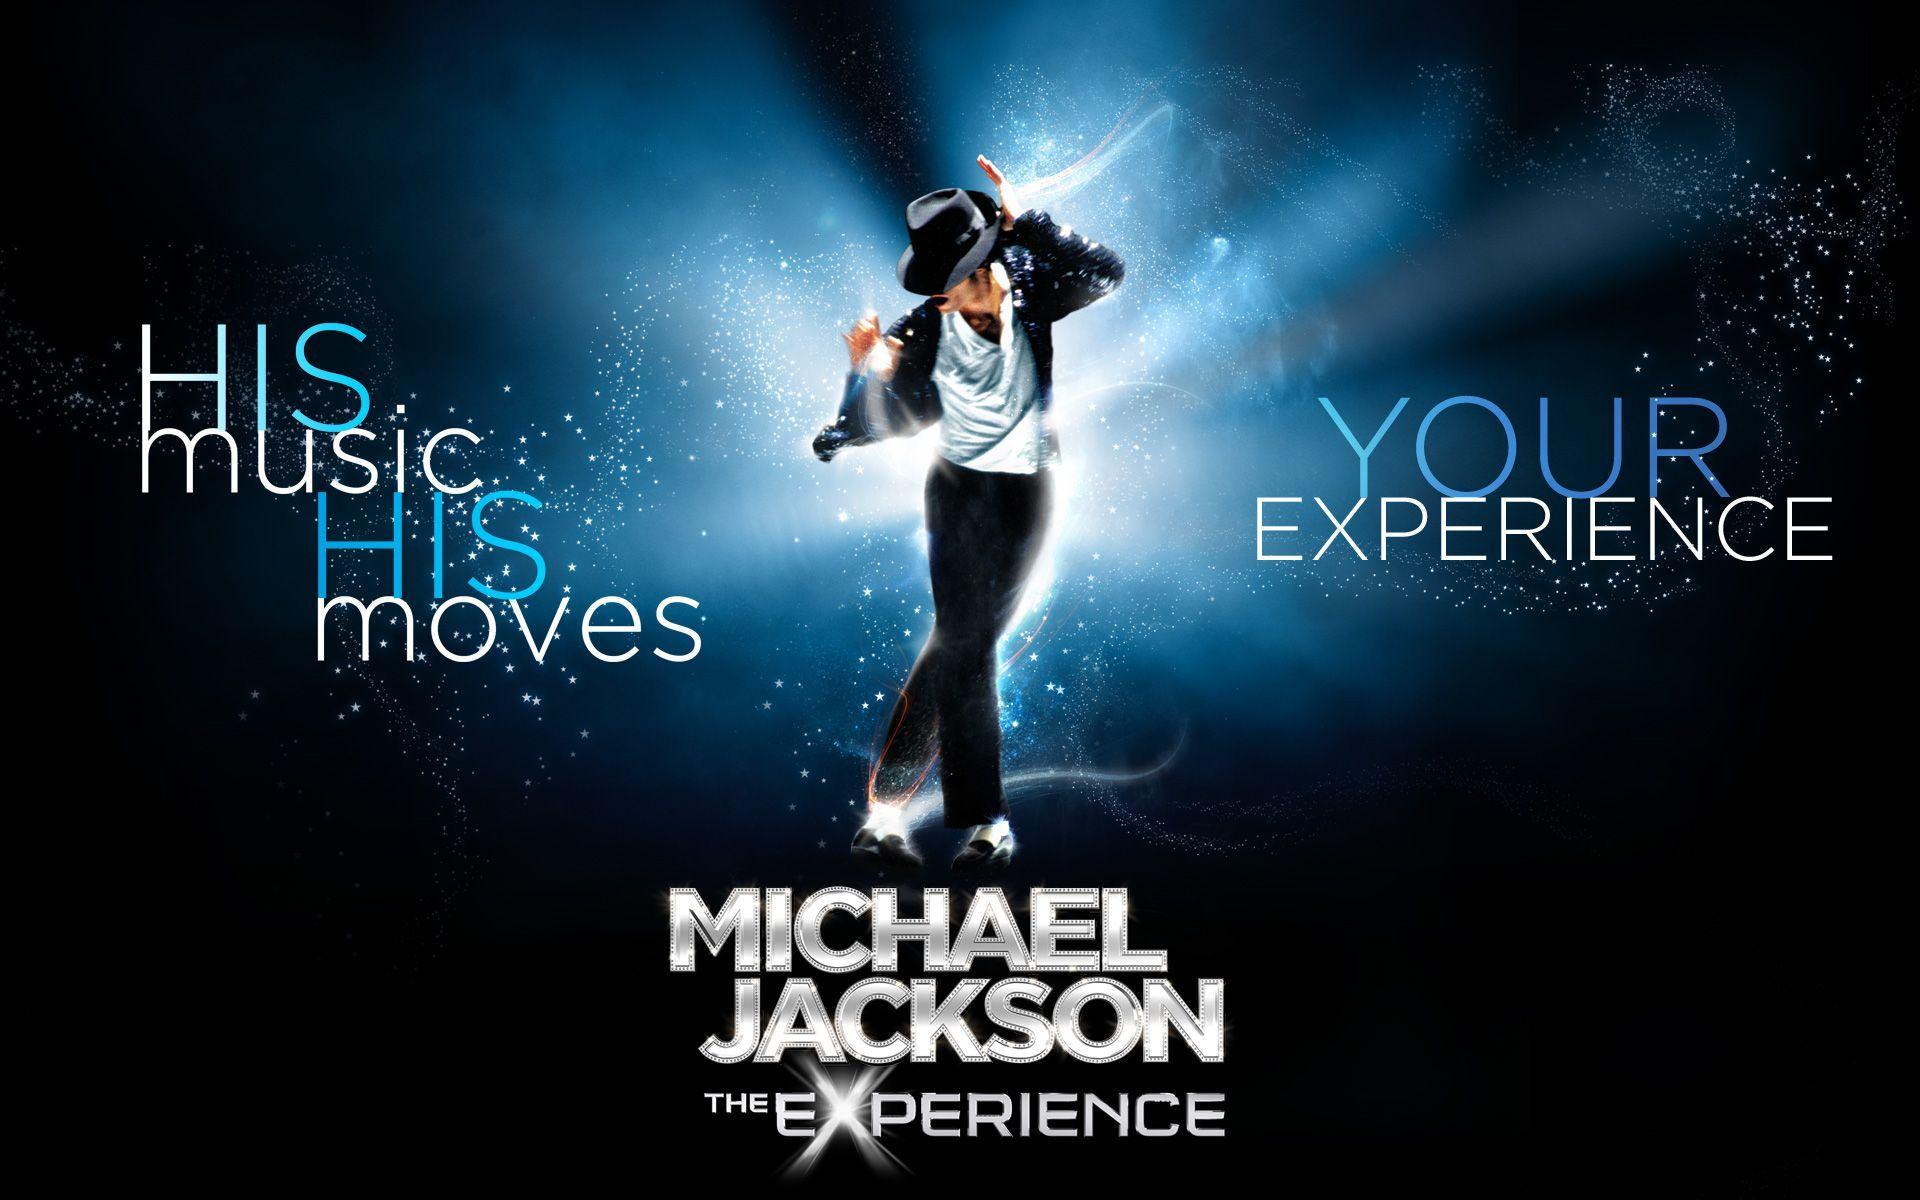 Awesome michael jackson dancing wallpaper iphone image. Michael